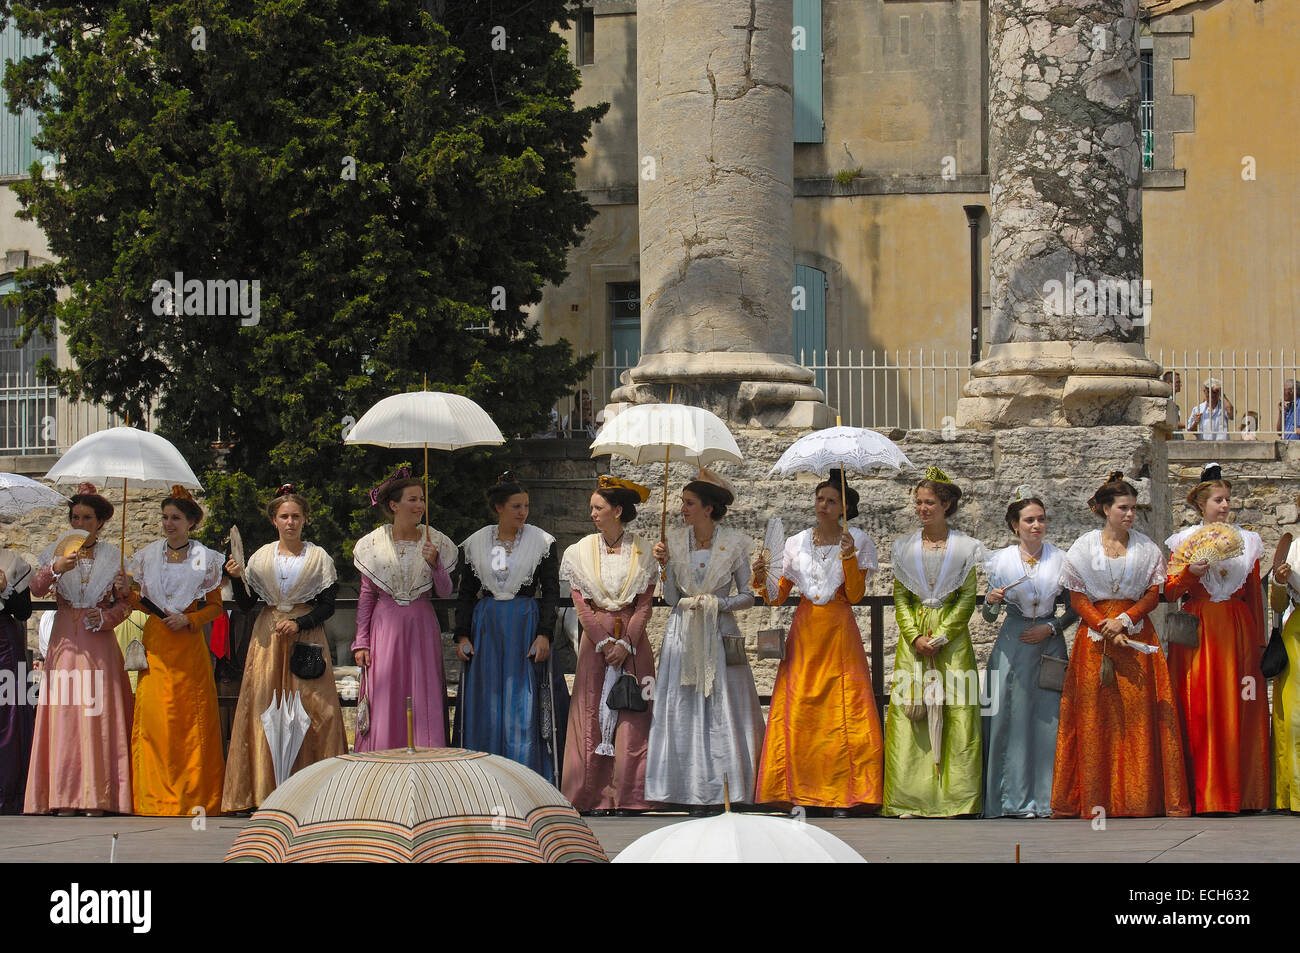 Arlésiennes, Fete du Costume, Arles, Bouches du Rhone, Provence, France, Europe Stock Photo